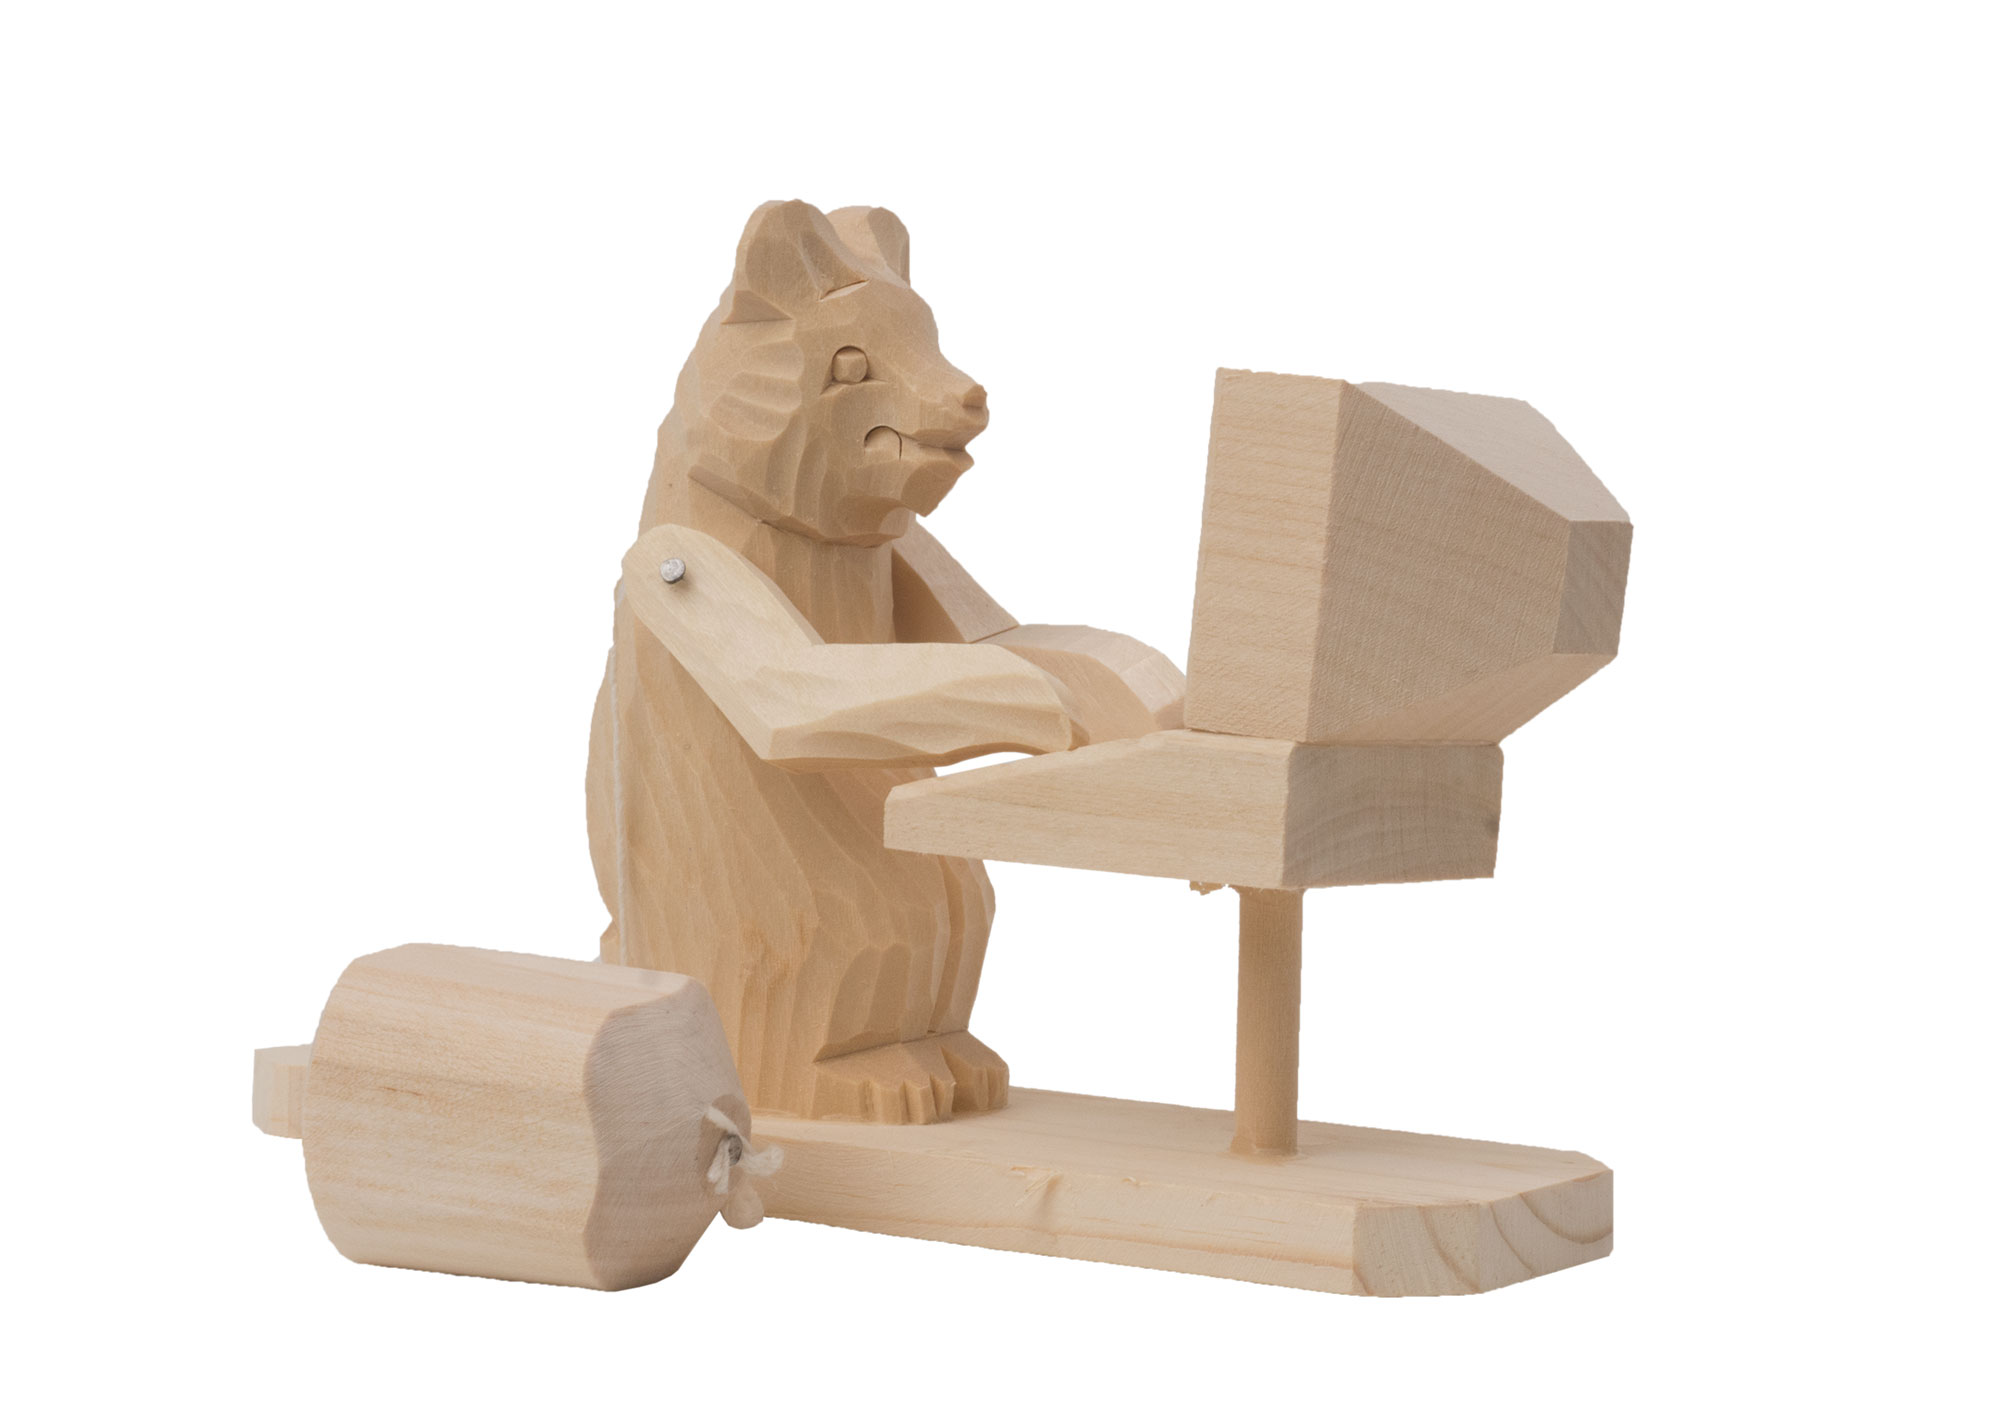 Buy Computer Bear Carved Toy at GoldenCockerel.com